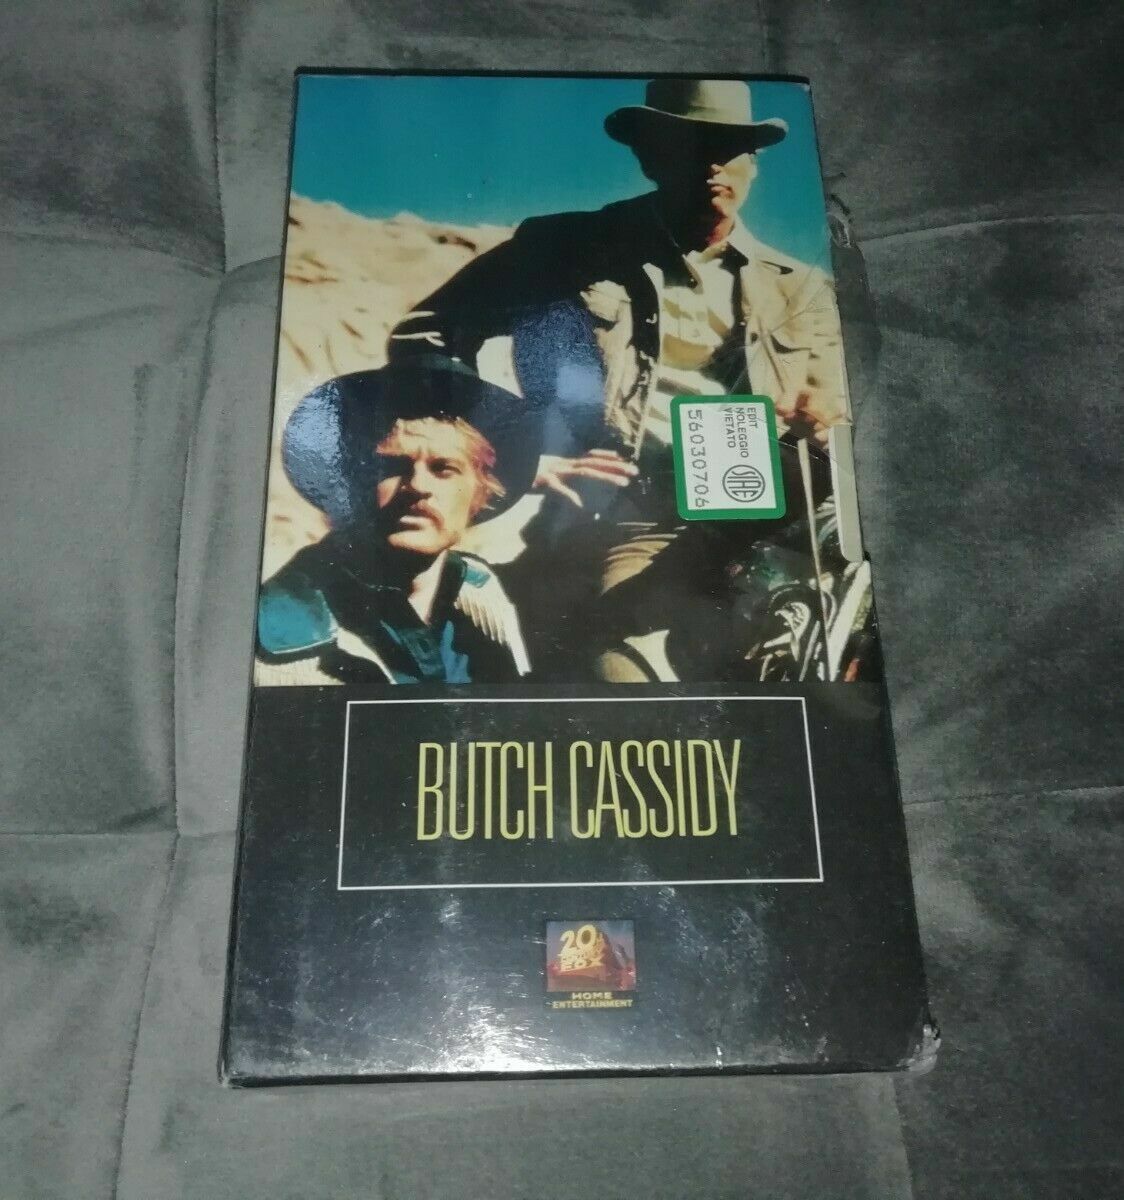  Butch Cassidy-VHS-1969-L'unit? -F